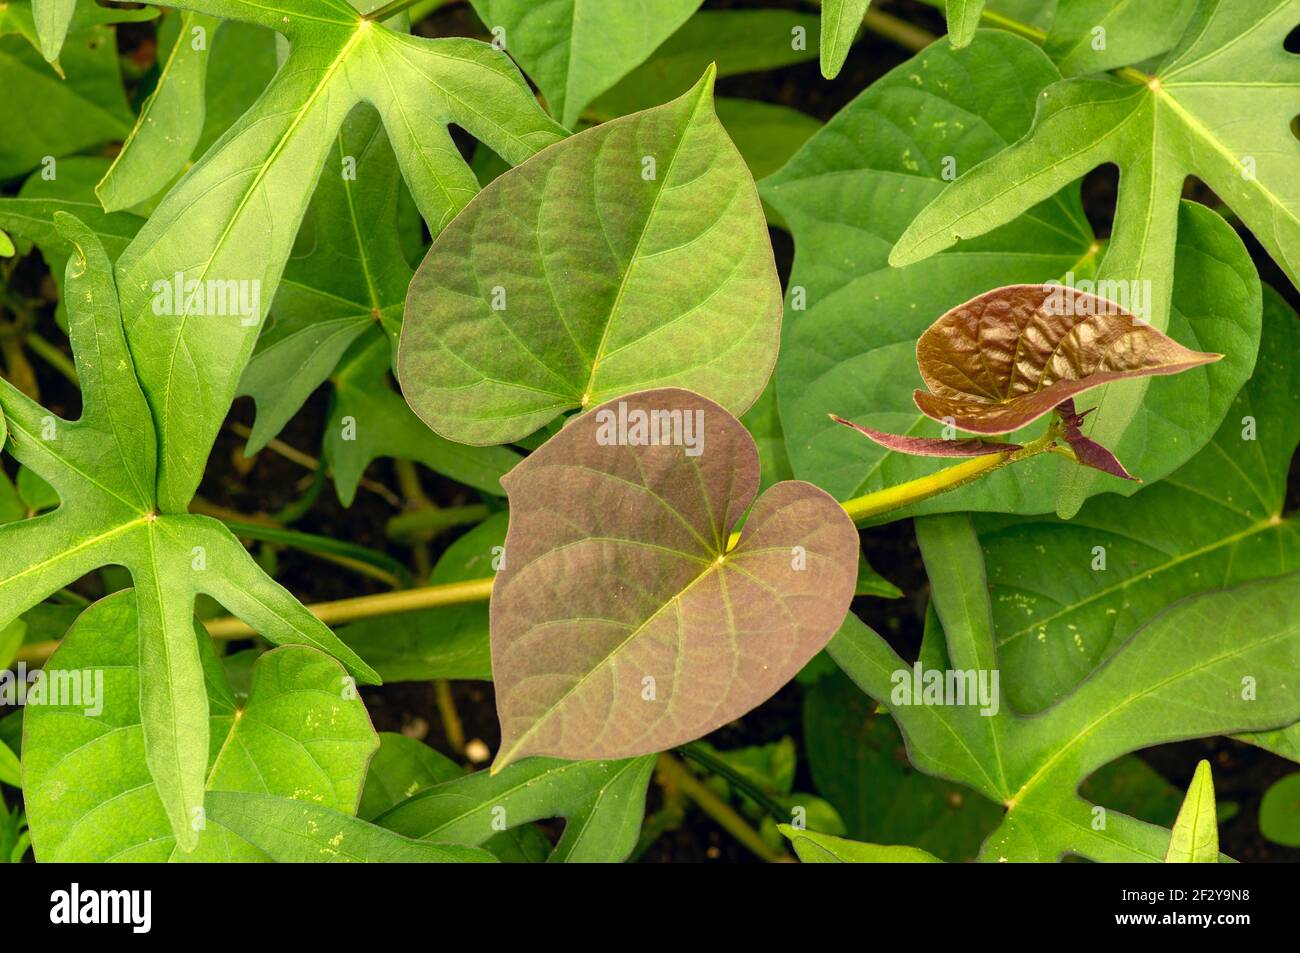 Sweet potato (Ipomoea batatas) leaves, called Ubi Jalar in Indonesia Stock Photo